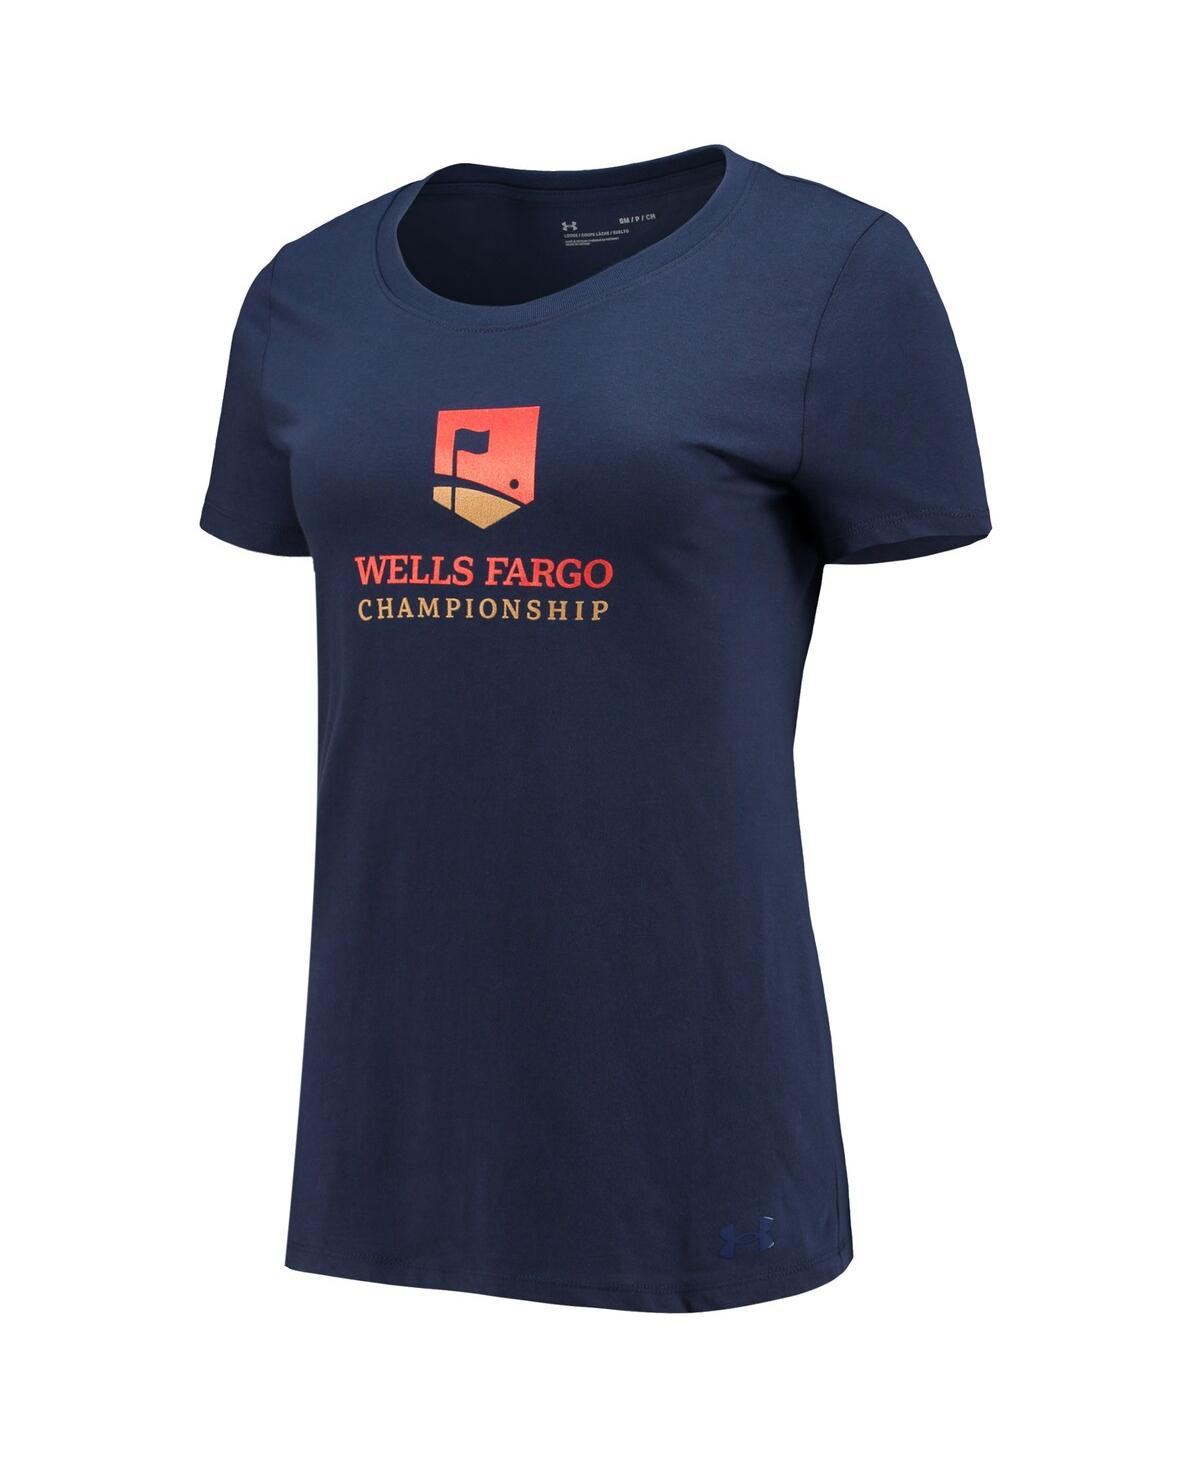 Shop Under Armour Women's  Navy Wells Fargo Championship T-shirt